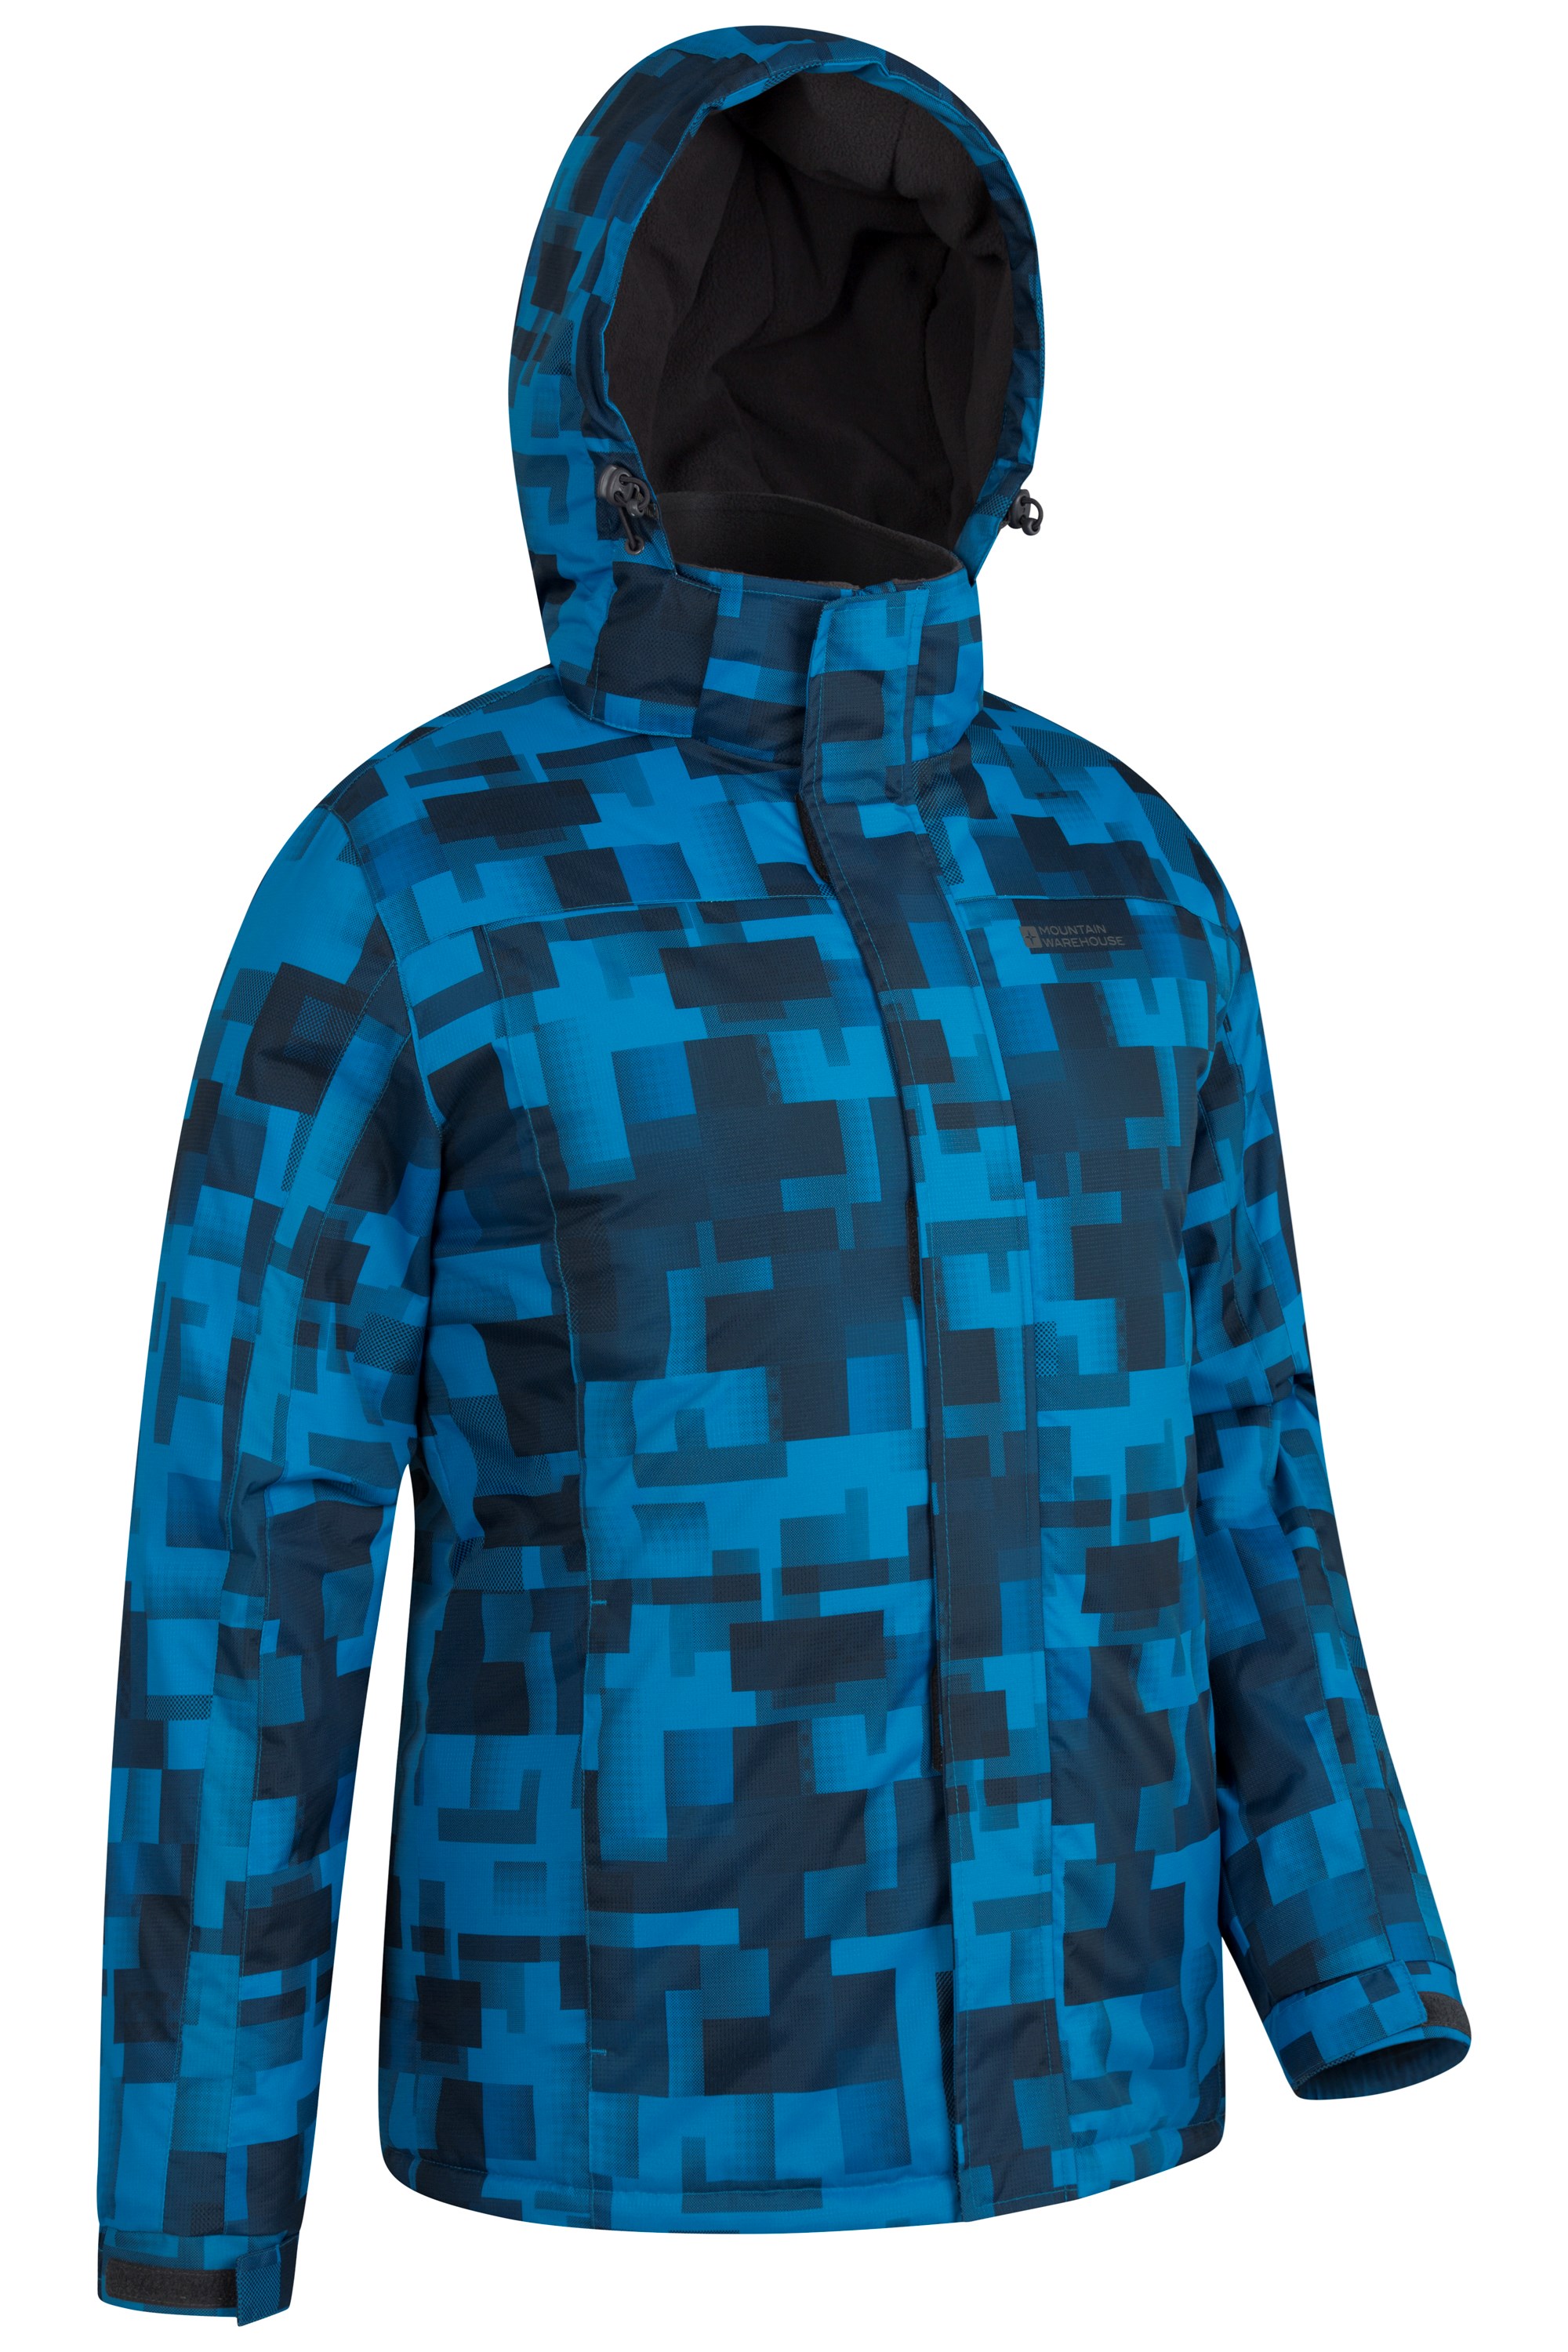 Mountain Warehouse Shadow Mens Printed Ski Jacket Snow Proof Insulated & Fleece